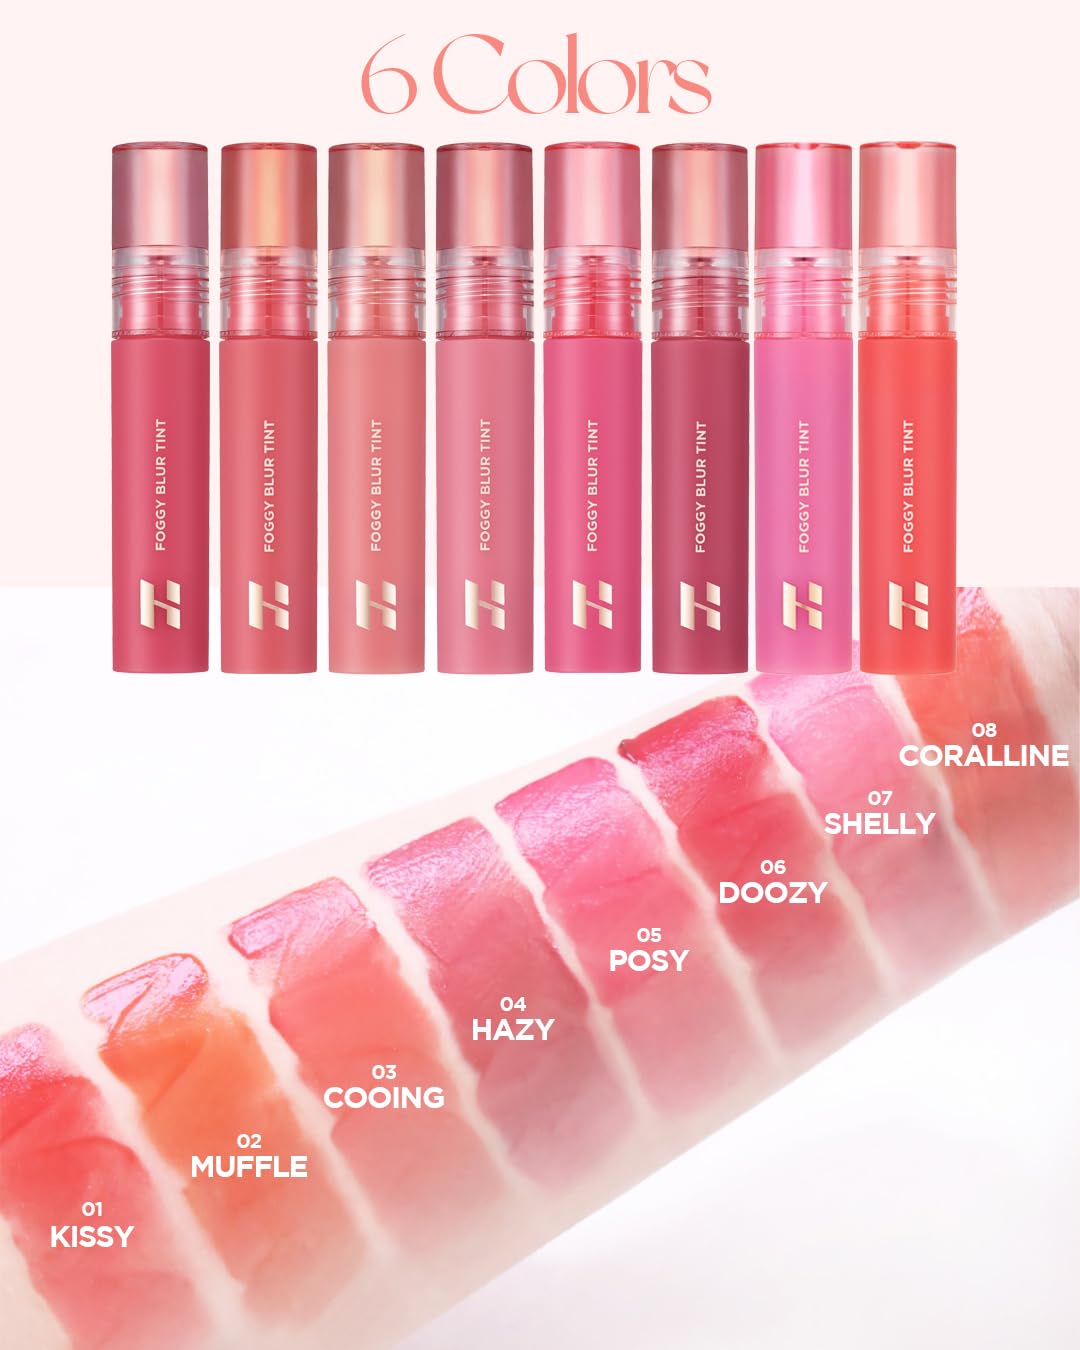 HOLIKA HOLIKA Foggy Blur Tint - Lightweight Airy Lip Makeup with Sheer Soft Color, Buildable Formula, Moisture & Silky Blur Fit, Pink Fruit Complex & Hyaluronic Acid, 0.14 fl.oz. (06 DOOZY)